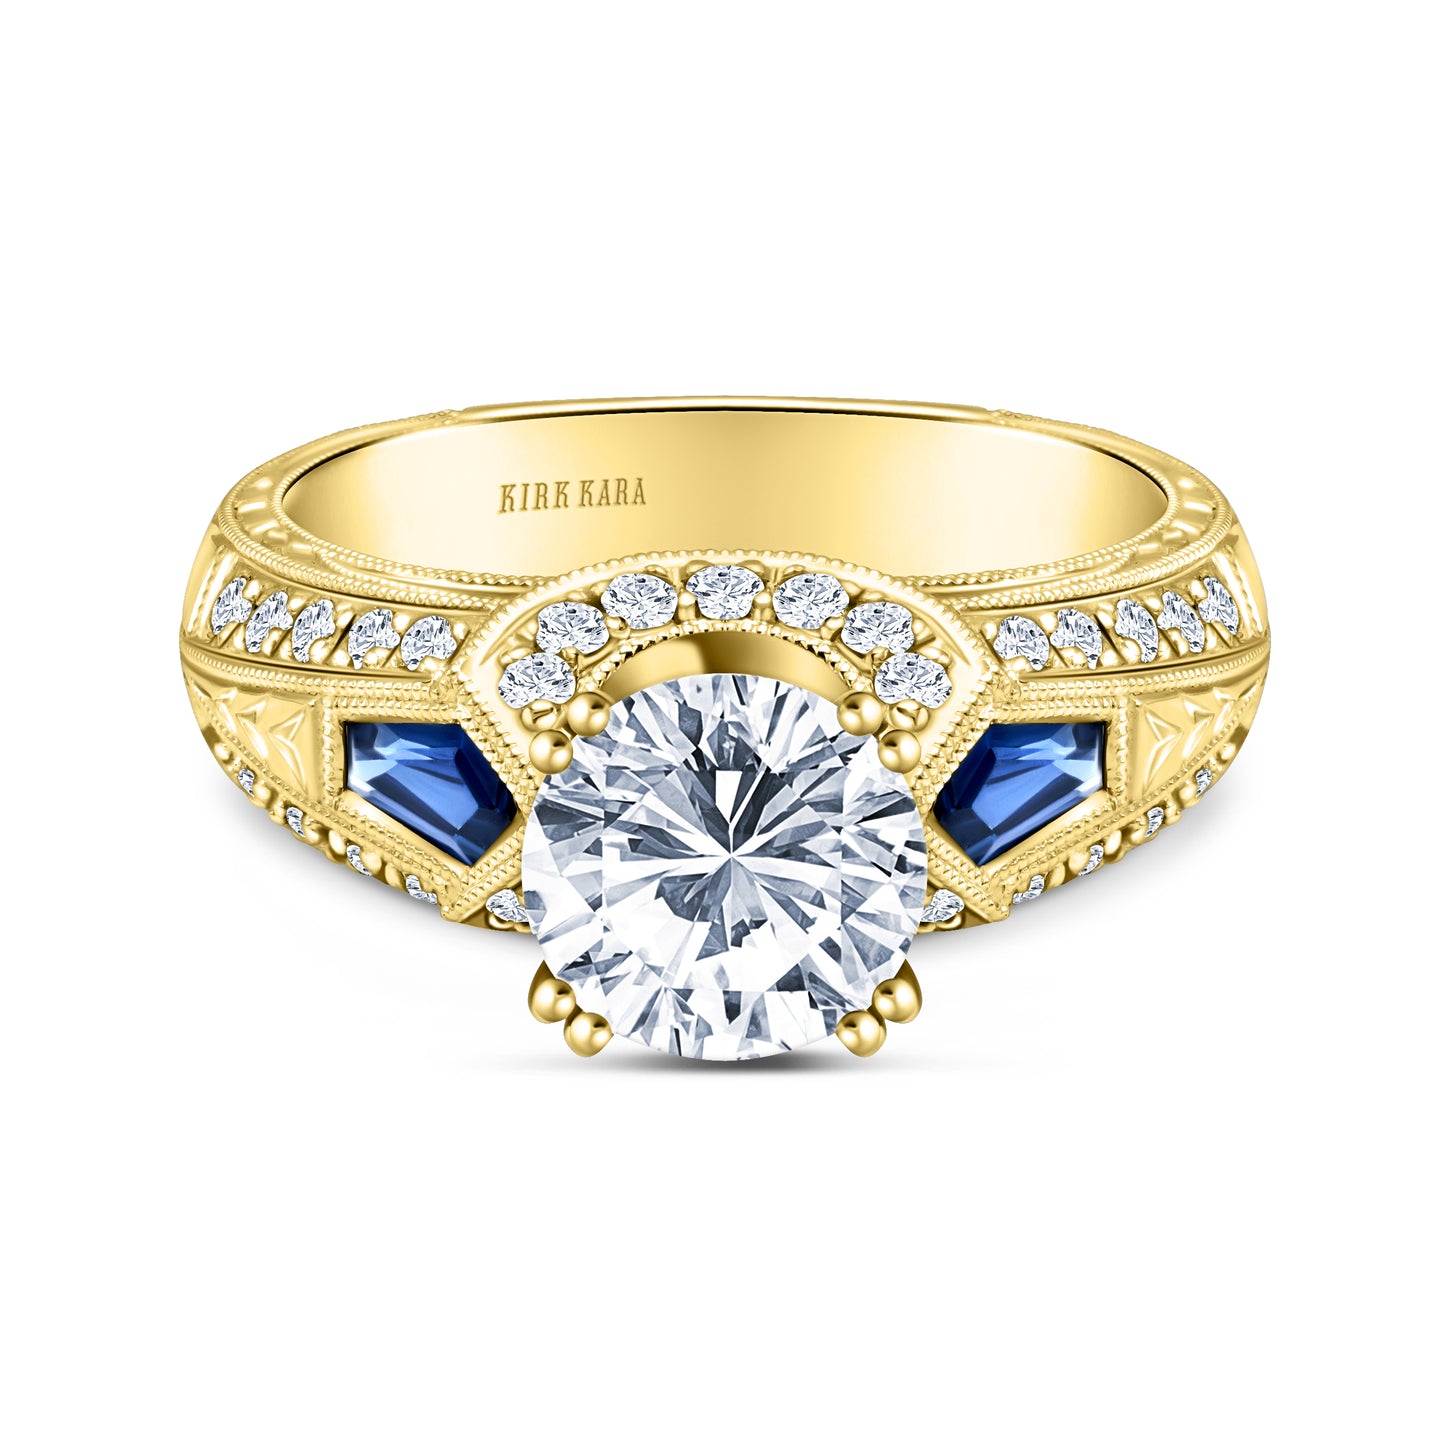 Sapphire Kite Vintage Inspired Diamond Engagement Ring